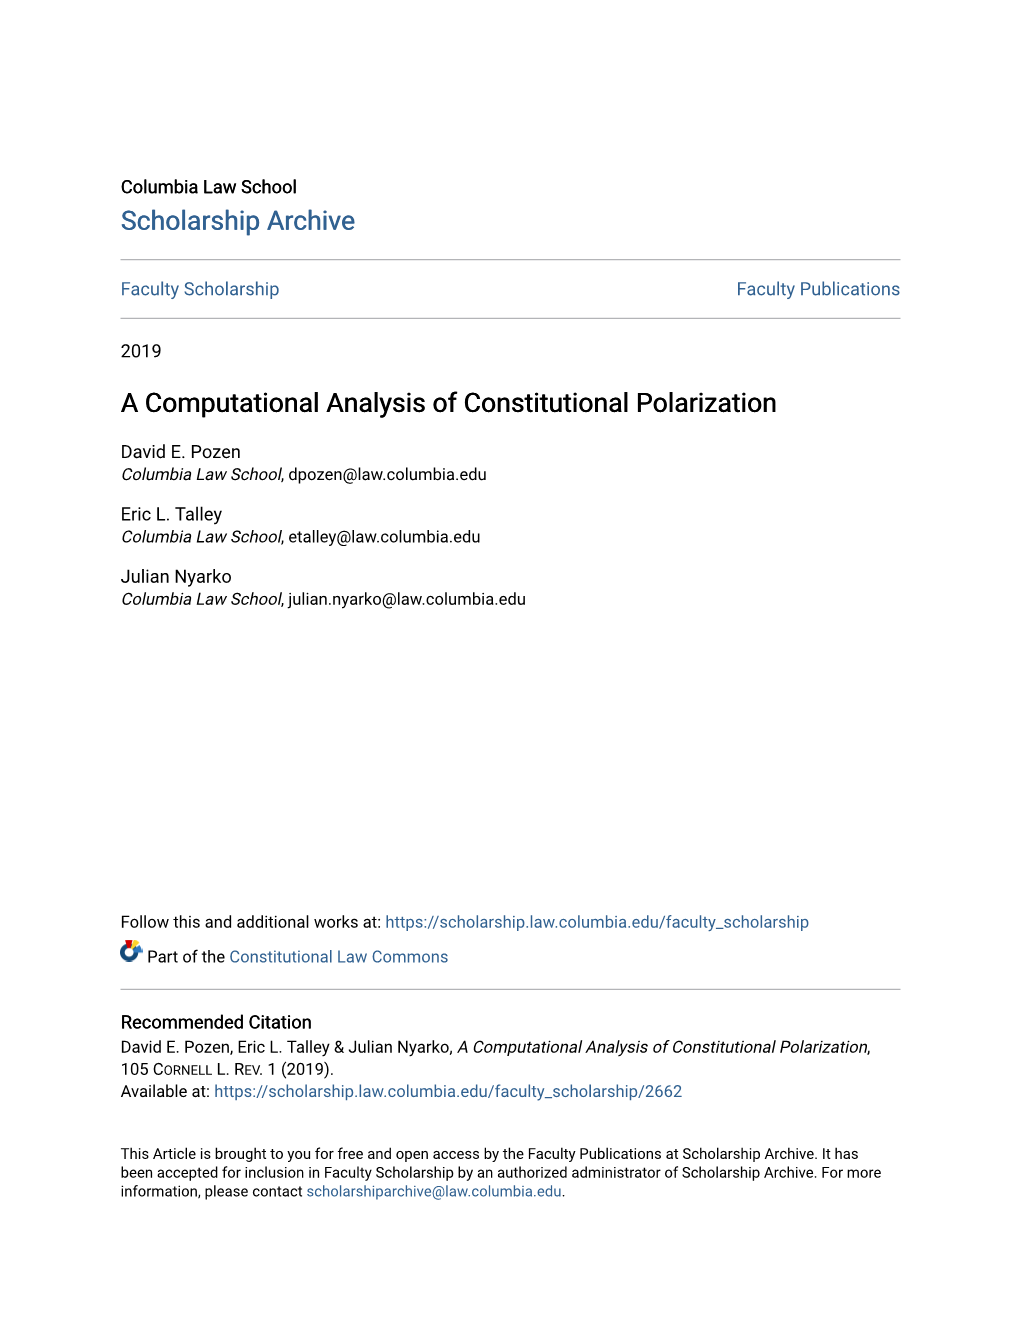 A Computational Analysis of Constitutional Polarization